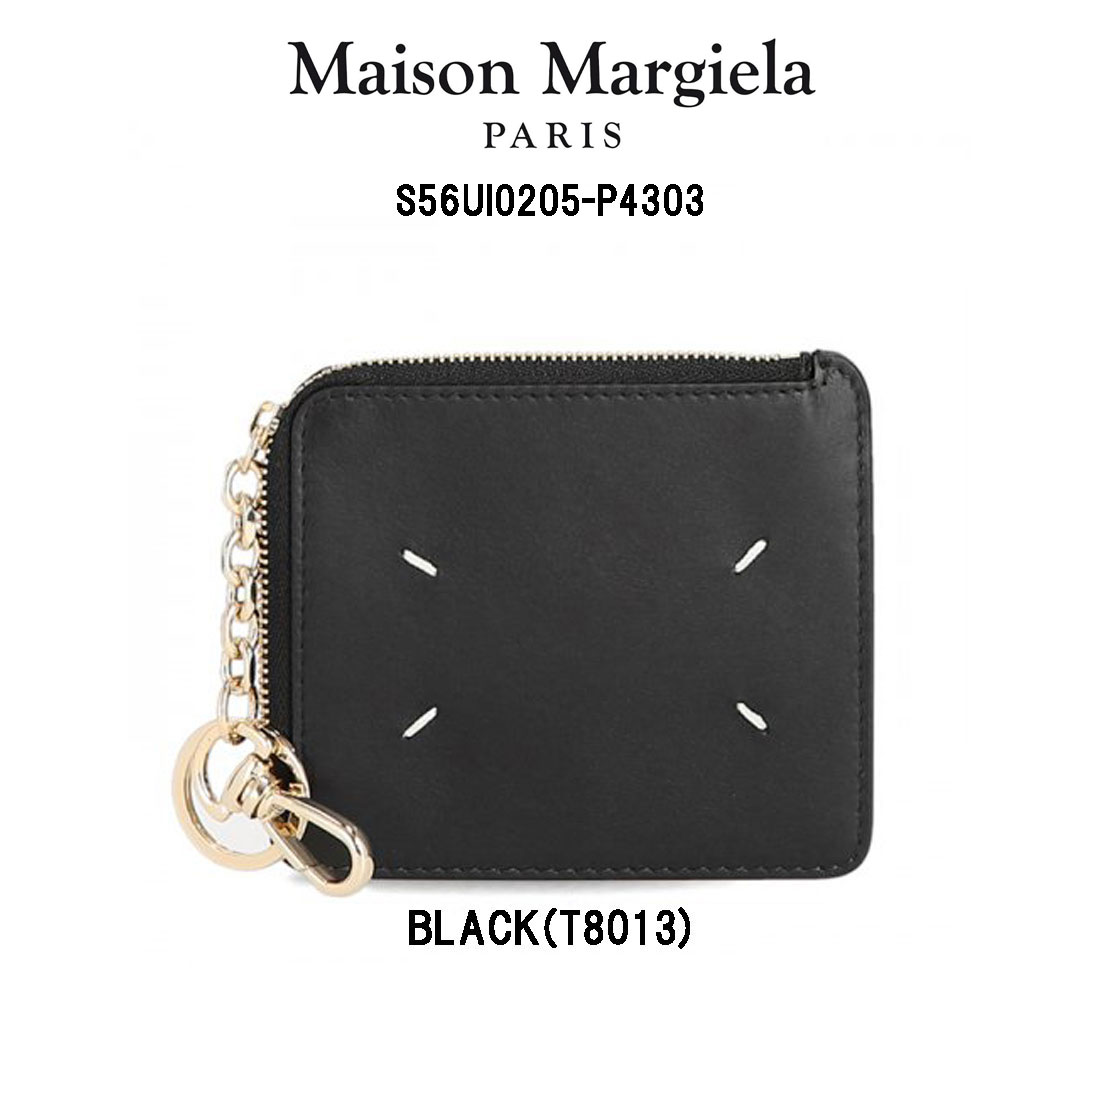 Maison Margiela(メゾンマルジェラ)キーポーチ カードケース 小銭入れ カーフレザー S56UI0205-P4303 |  UNDIE楽天市場店